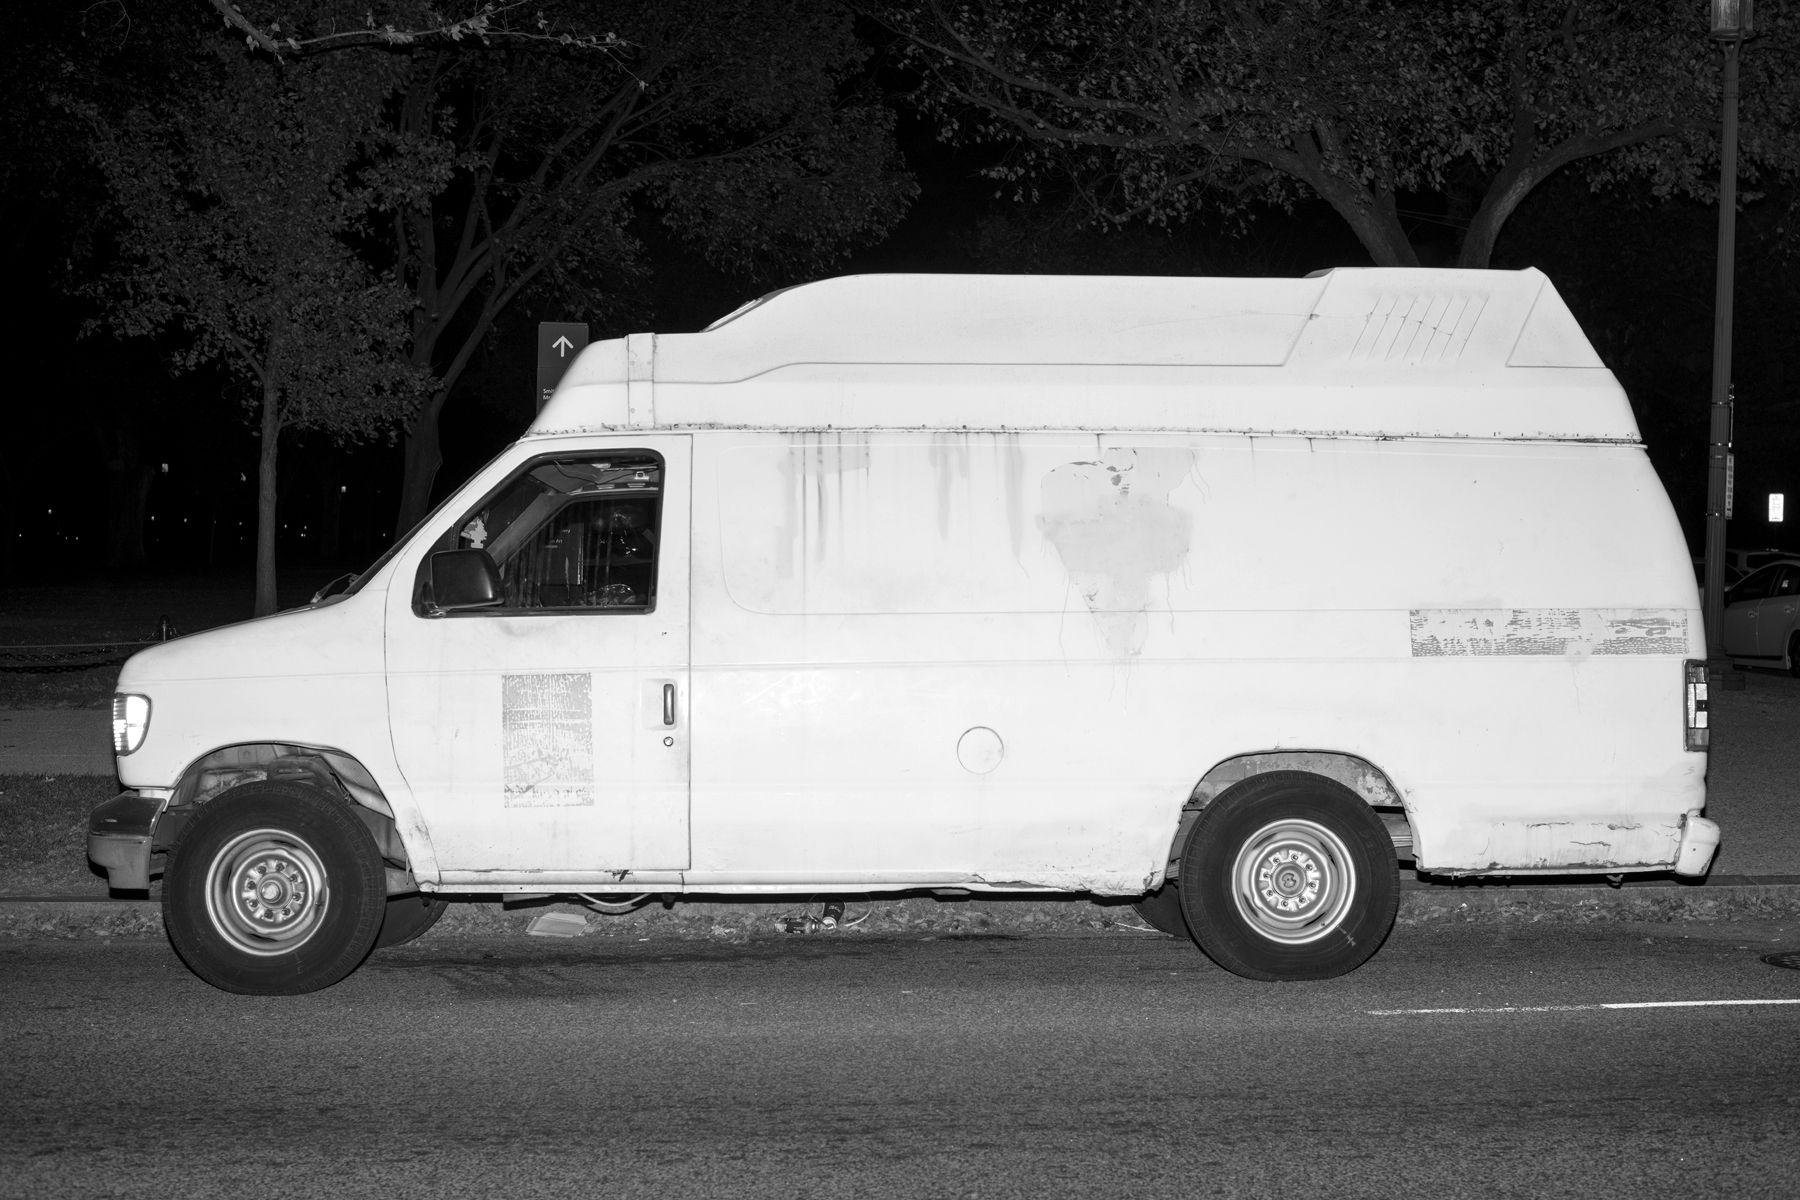 Black and White Vans Car Logo - White Vans & Black Suburbans. The New Republic